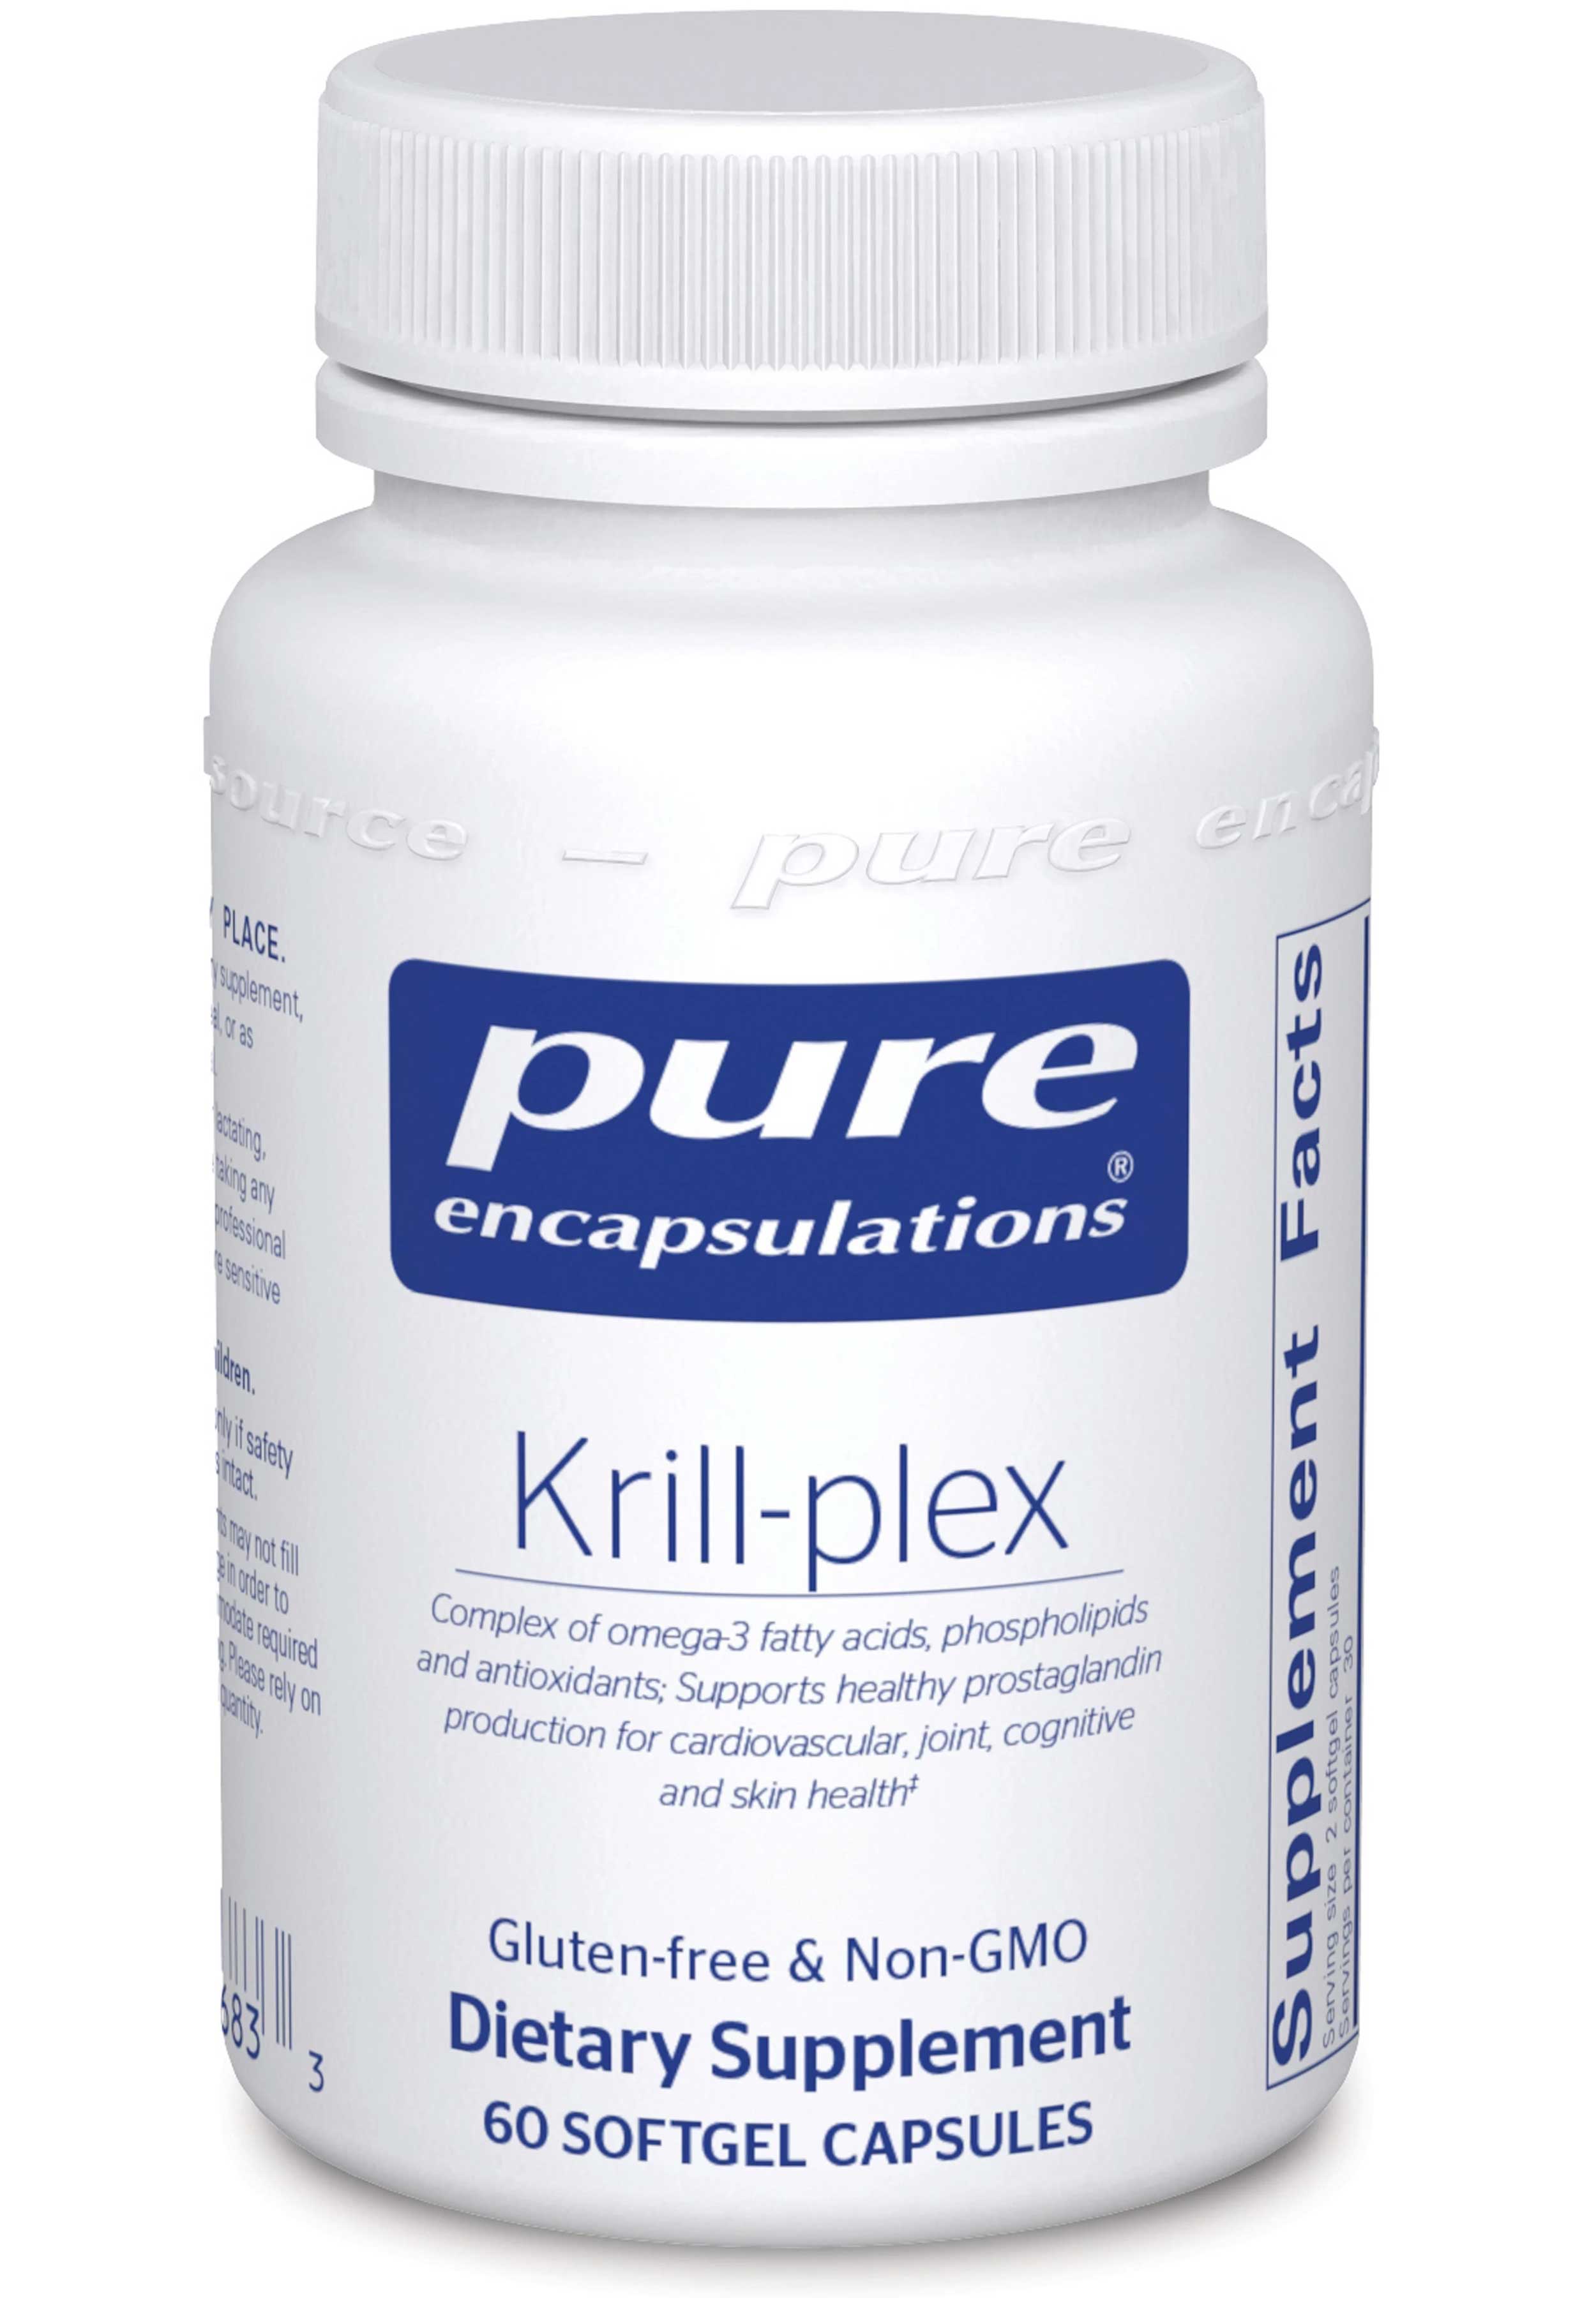 Pure Encapsulations Krill-plex